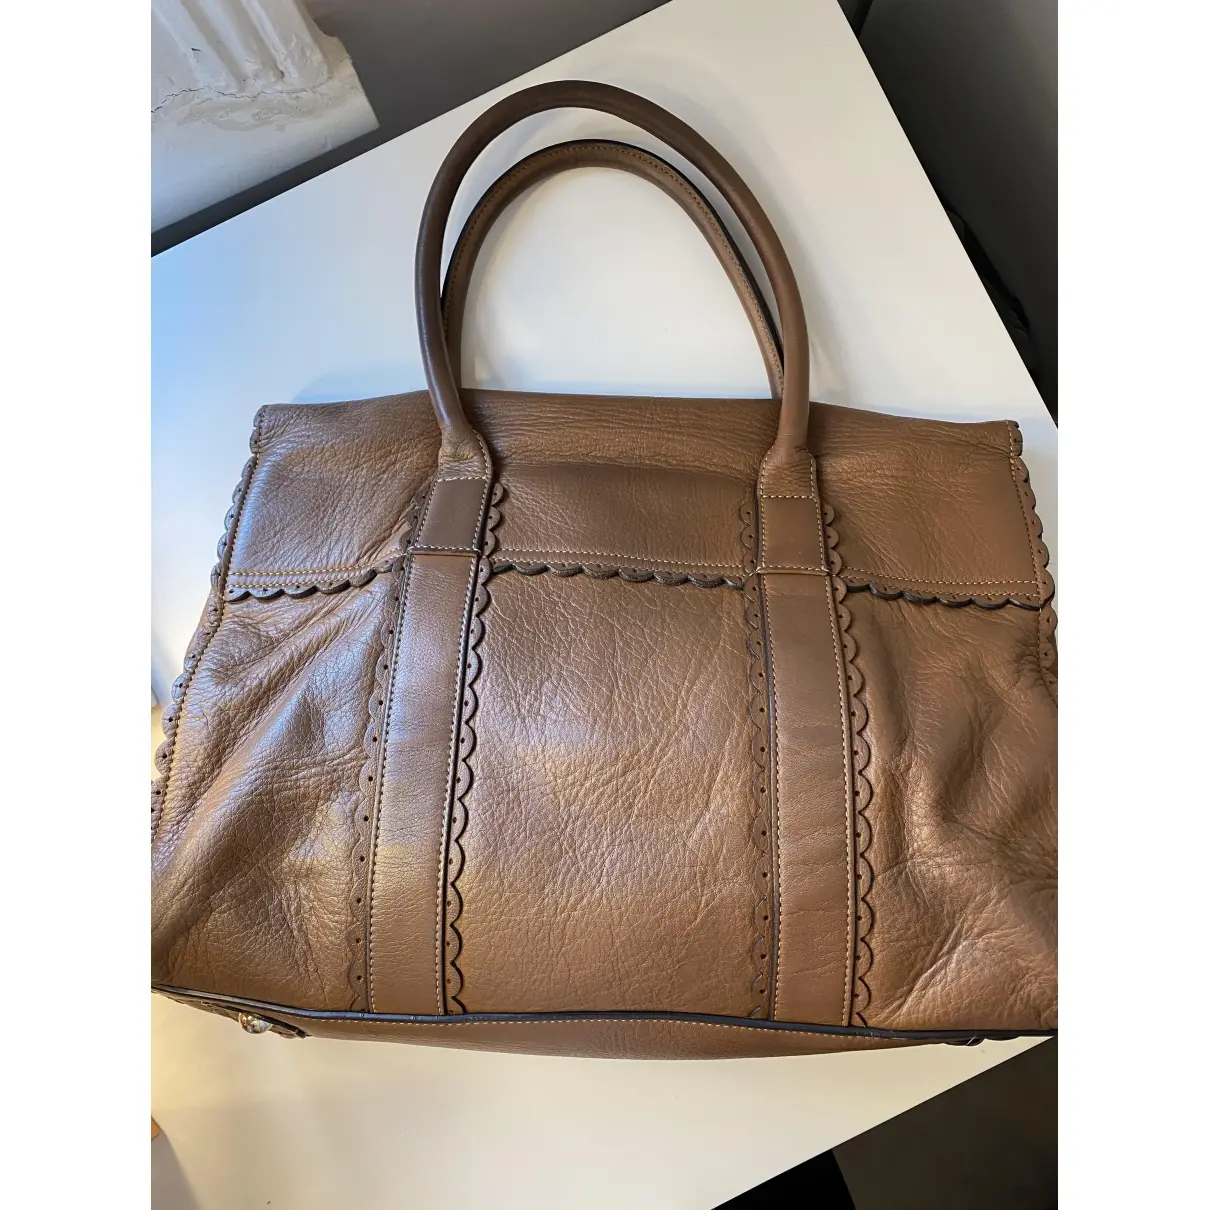 Buy Mulberry Bayswater leather handbag online